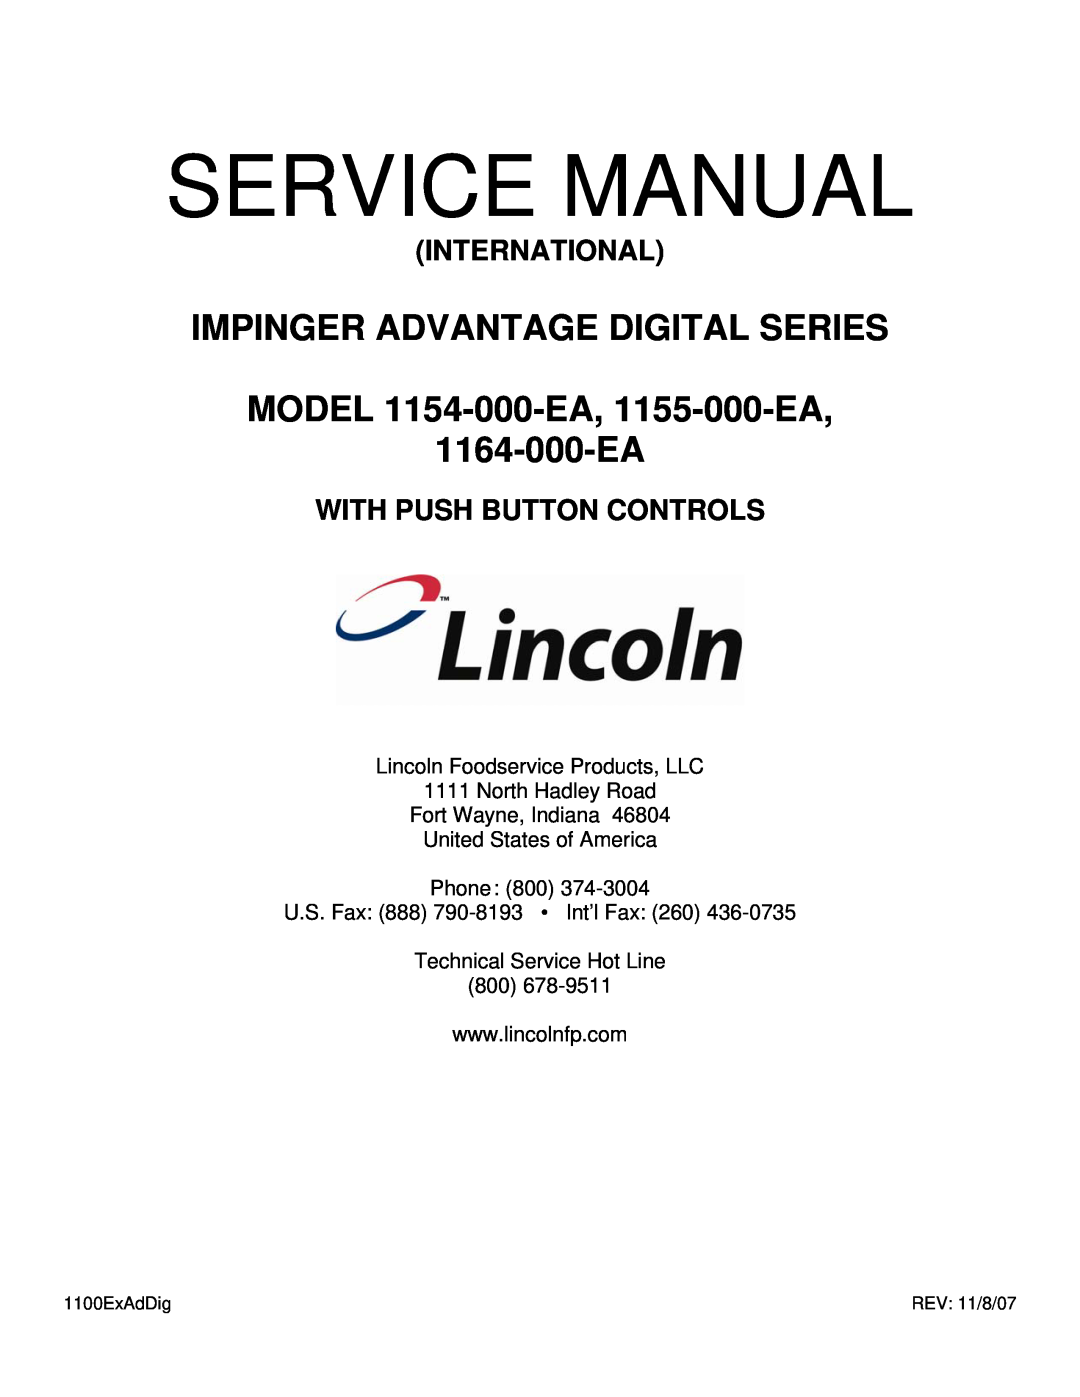 Lincoln 1164-000-EA service manual Lincoln Foodservice Products, LLC, North Hadley Road Fort Wayne, Indiana, 1100ExAdDig 